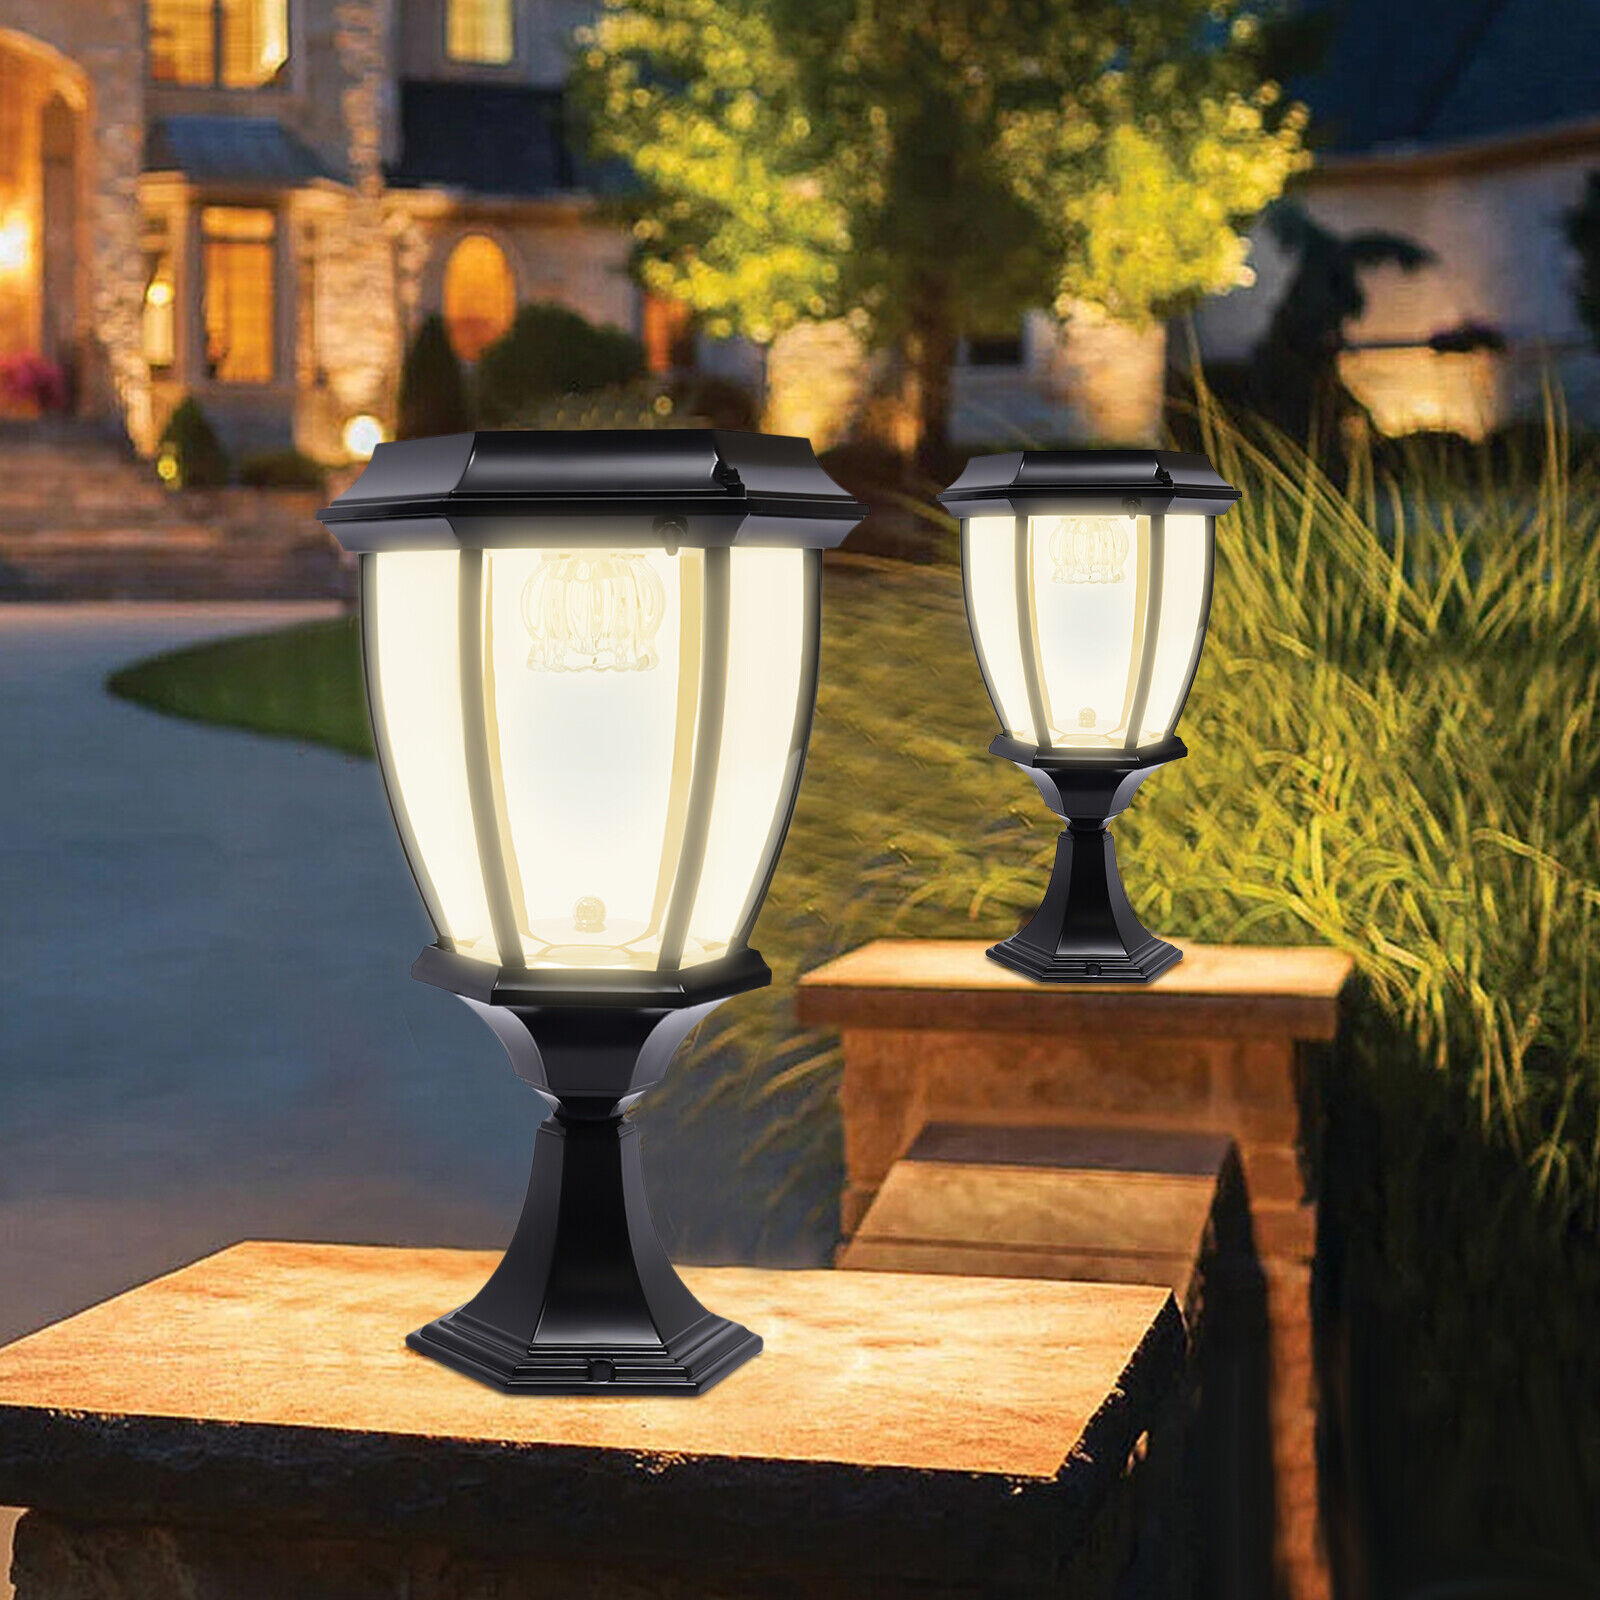 DENEST Solar Powered Post Light Outdoor LED Pillar Light Garden Lawn Black  Decor Lamp